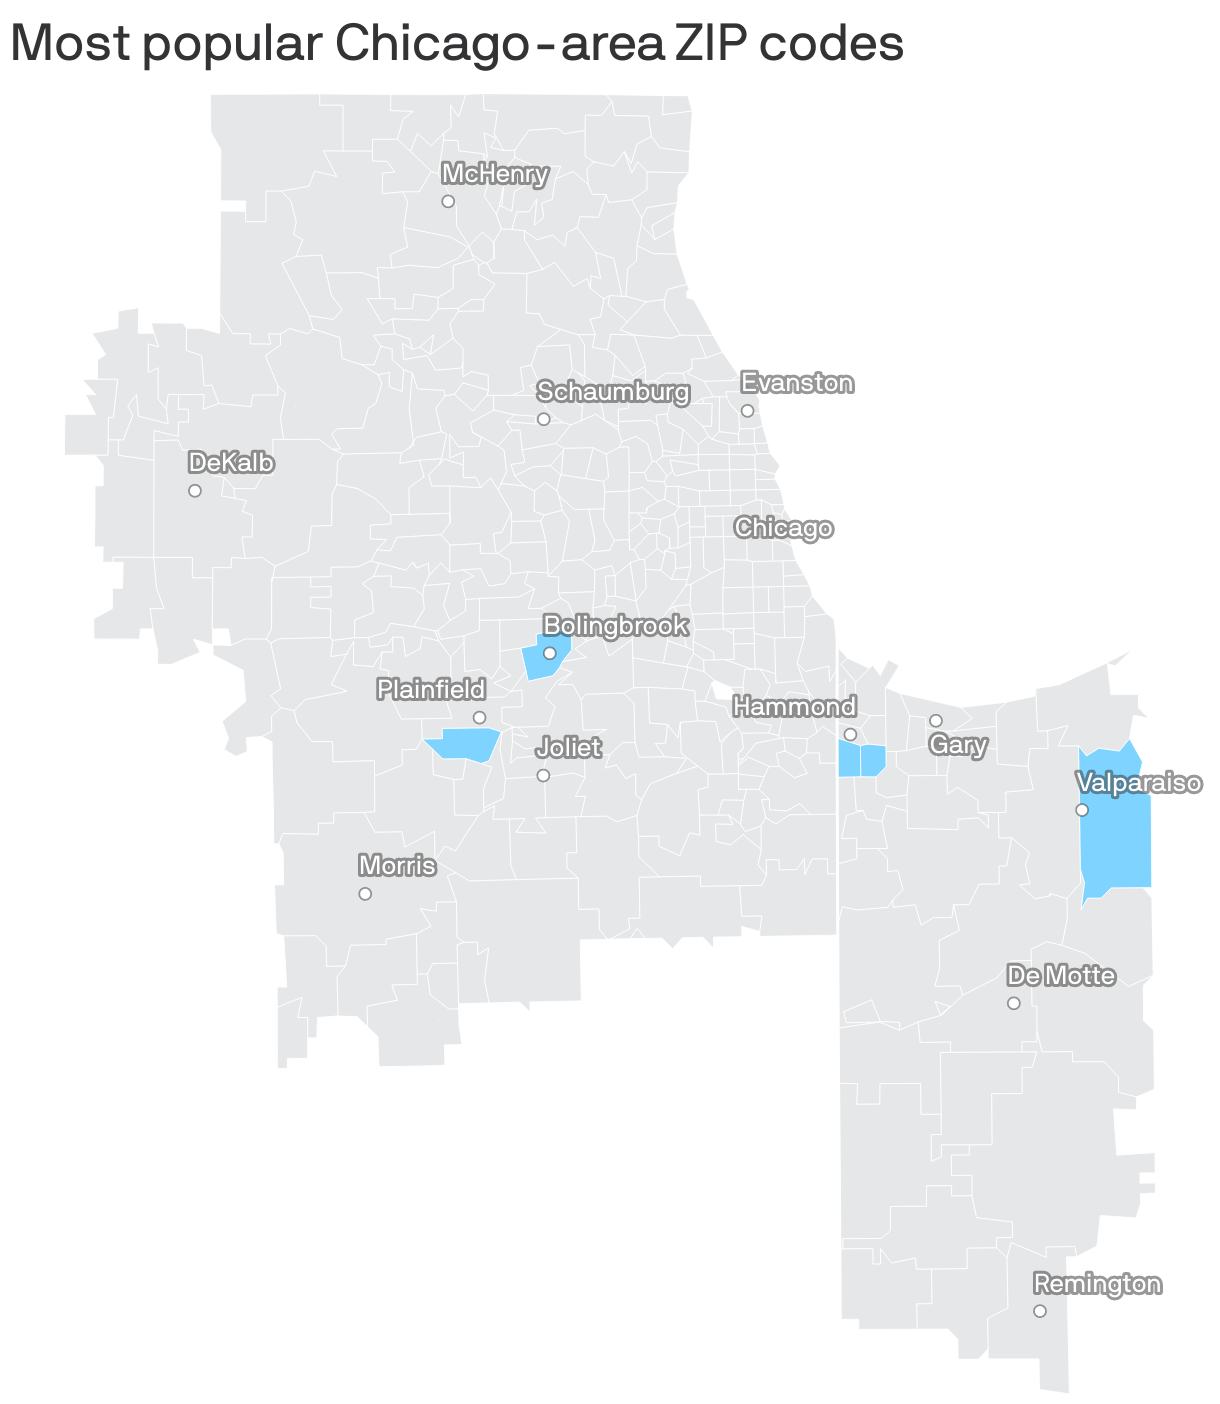 Most popular Chicago-area ZIP codes